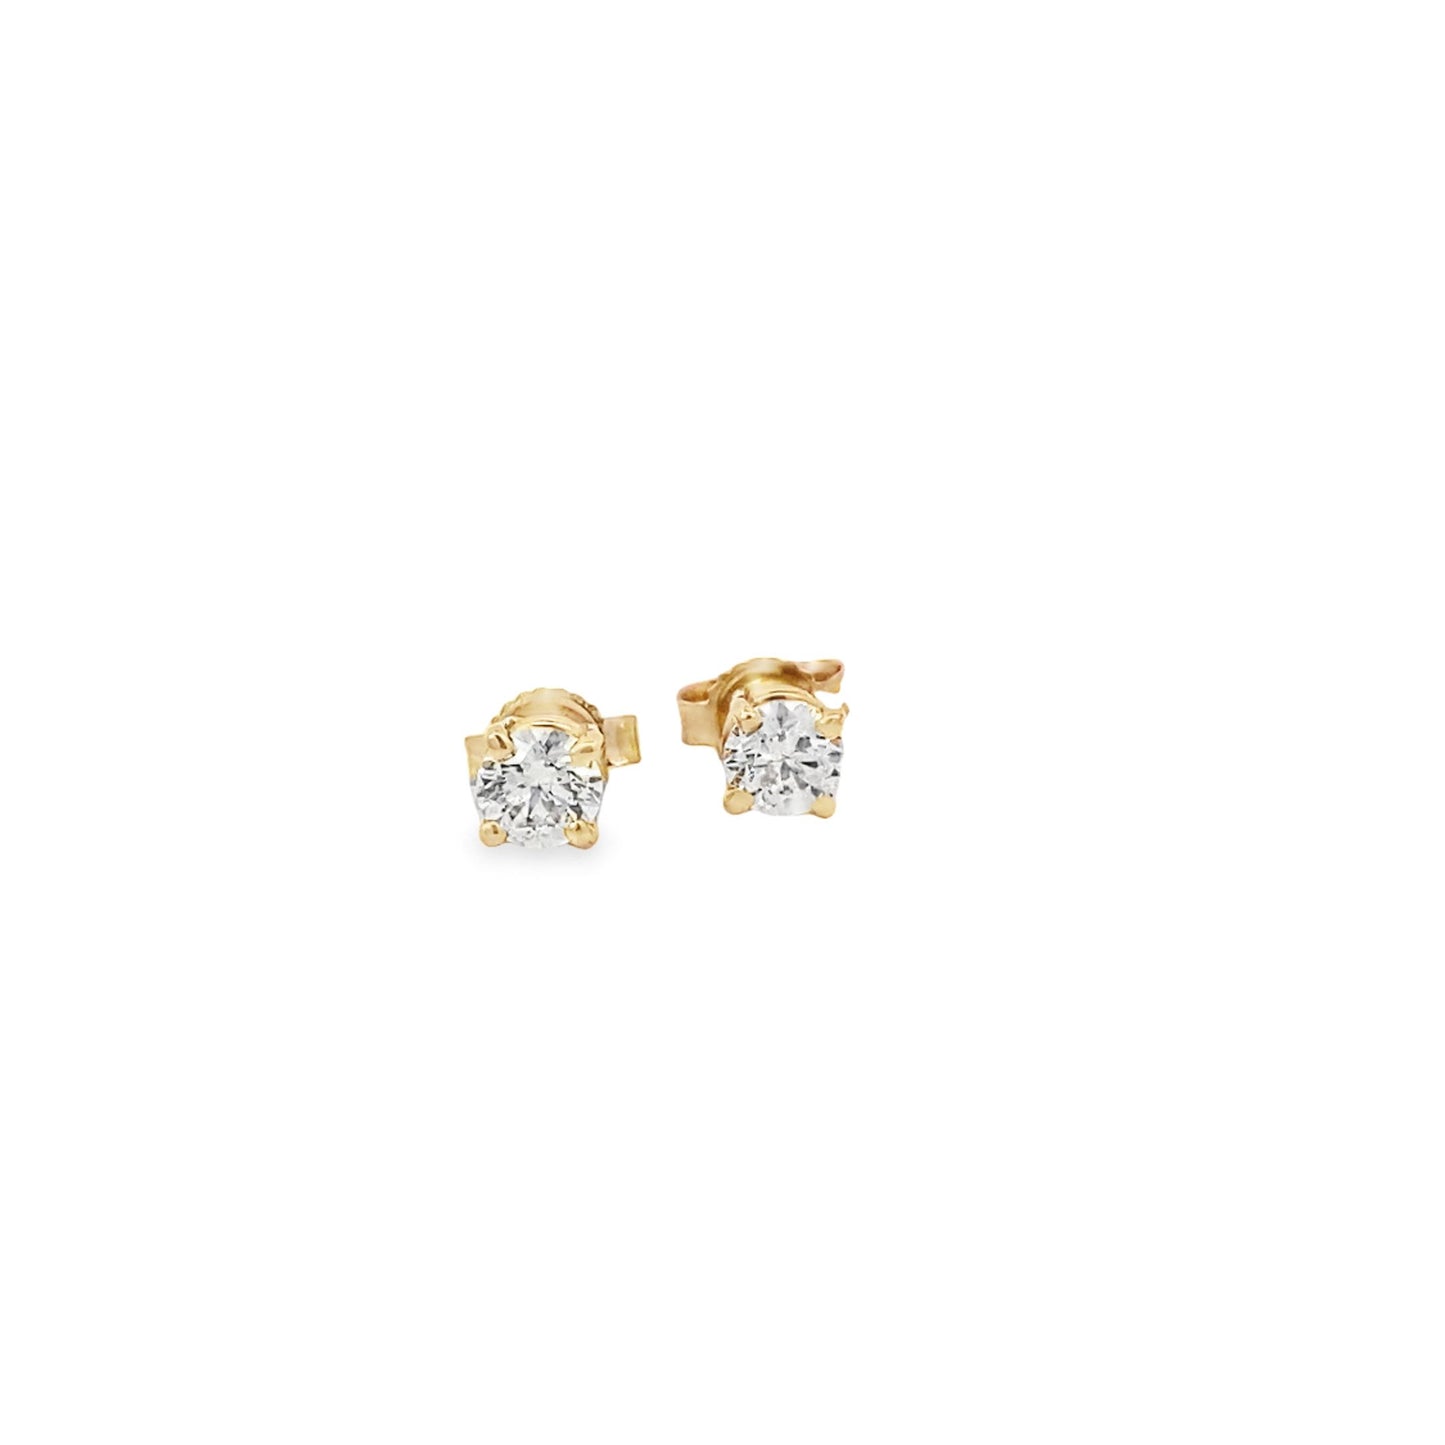 14K Yellow Gold Diamond Solitaire Stud Earrings - 0.56 Carat